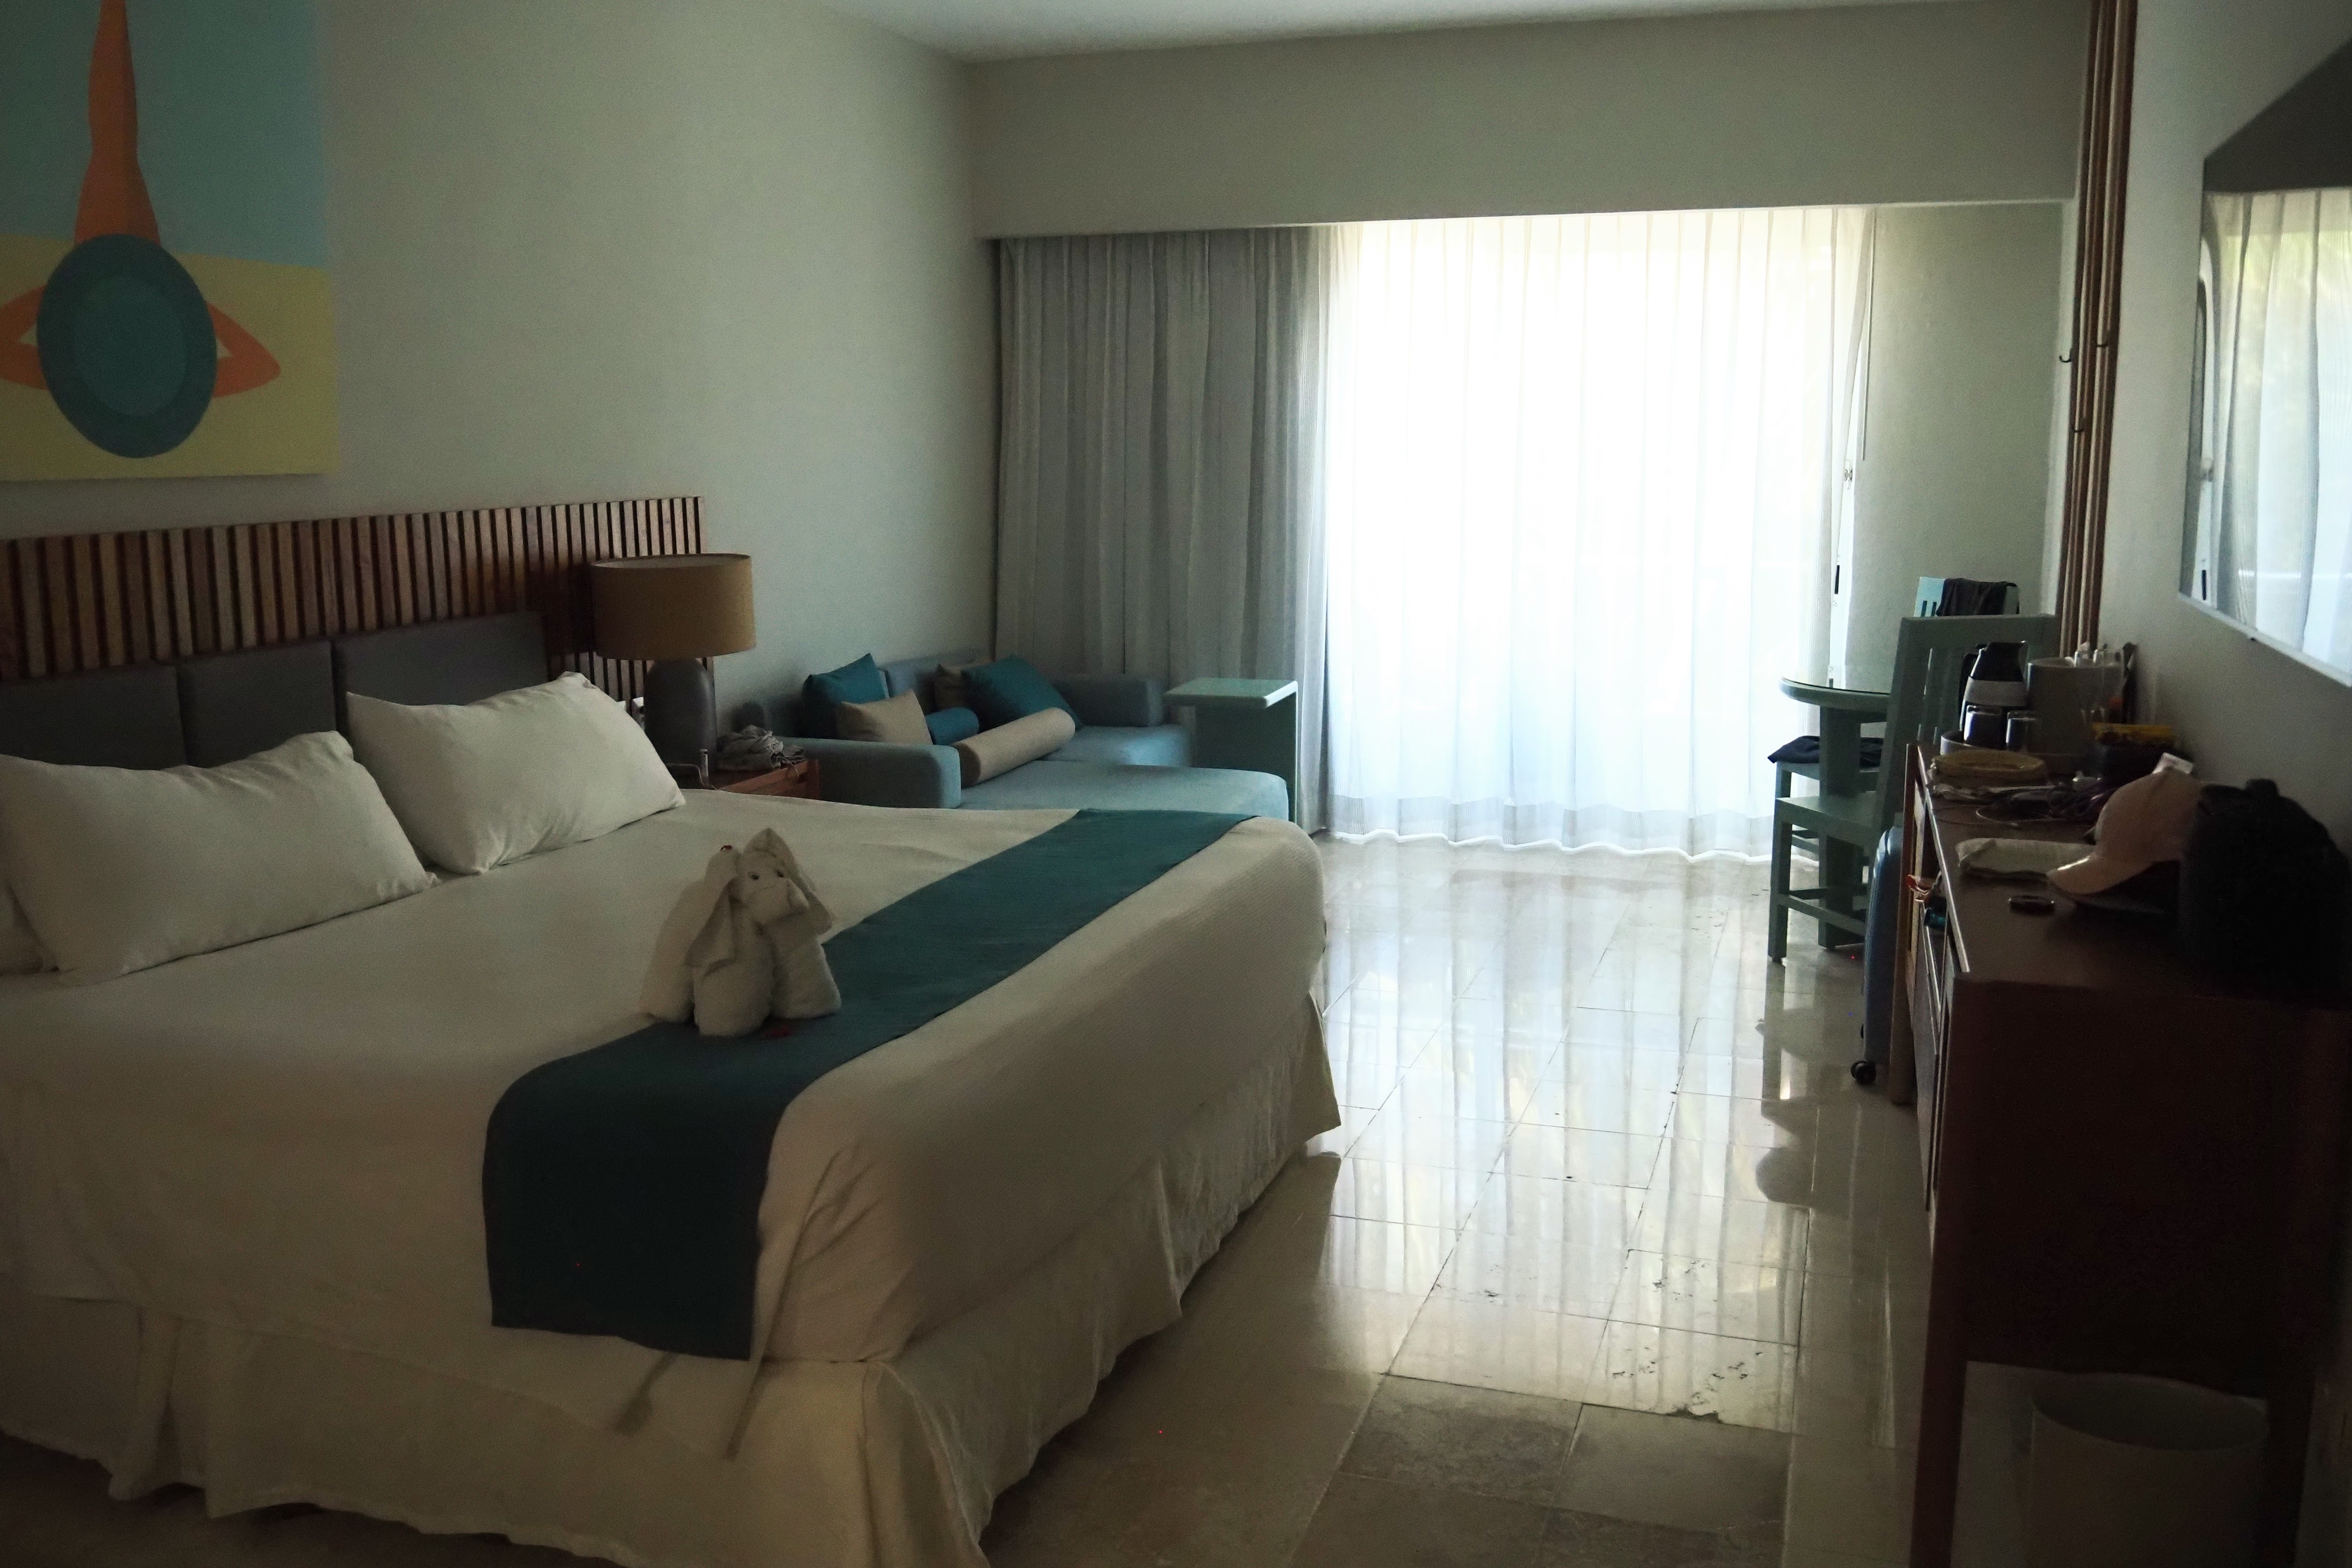 Hôtel Viva Maya Wyndham Playa Del Carmen - Mexique, les petites bulles de ma vie, voyage